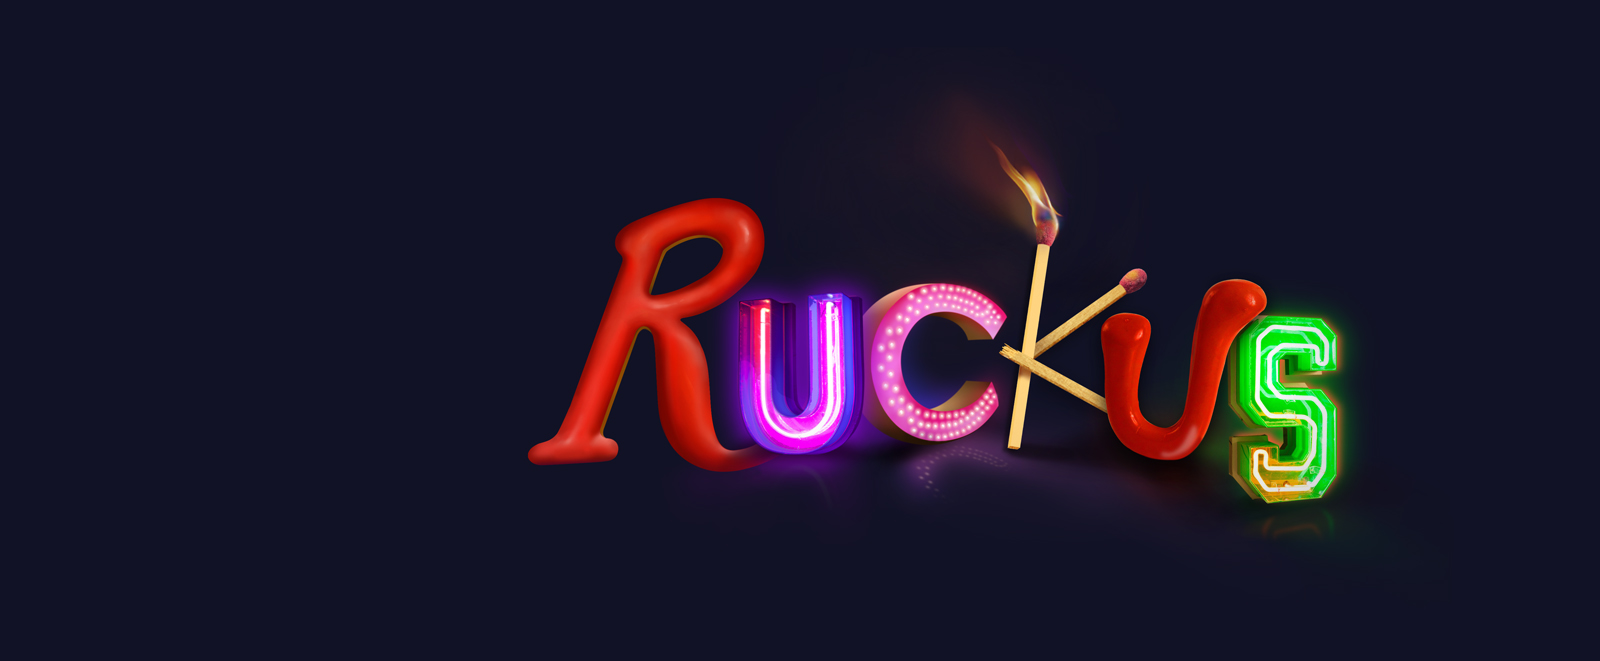 Ruckus brand design by Zero Budget Agency